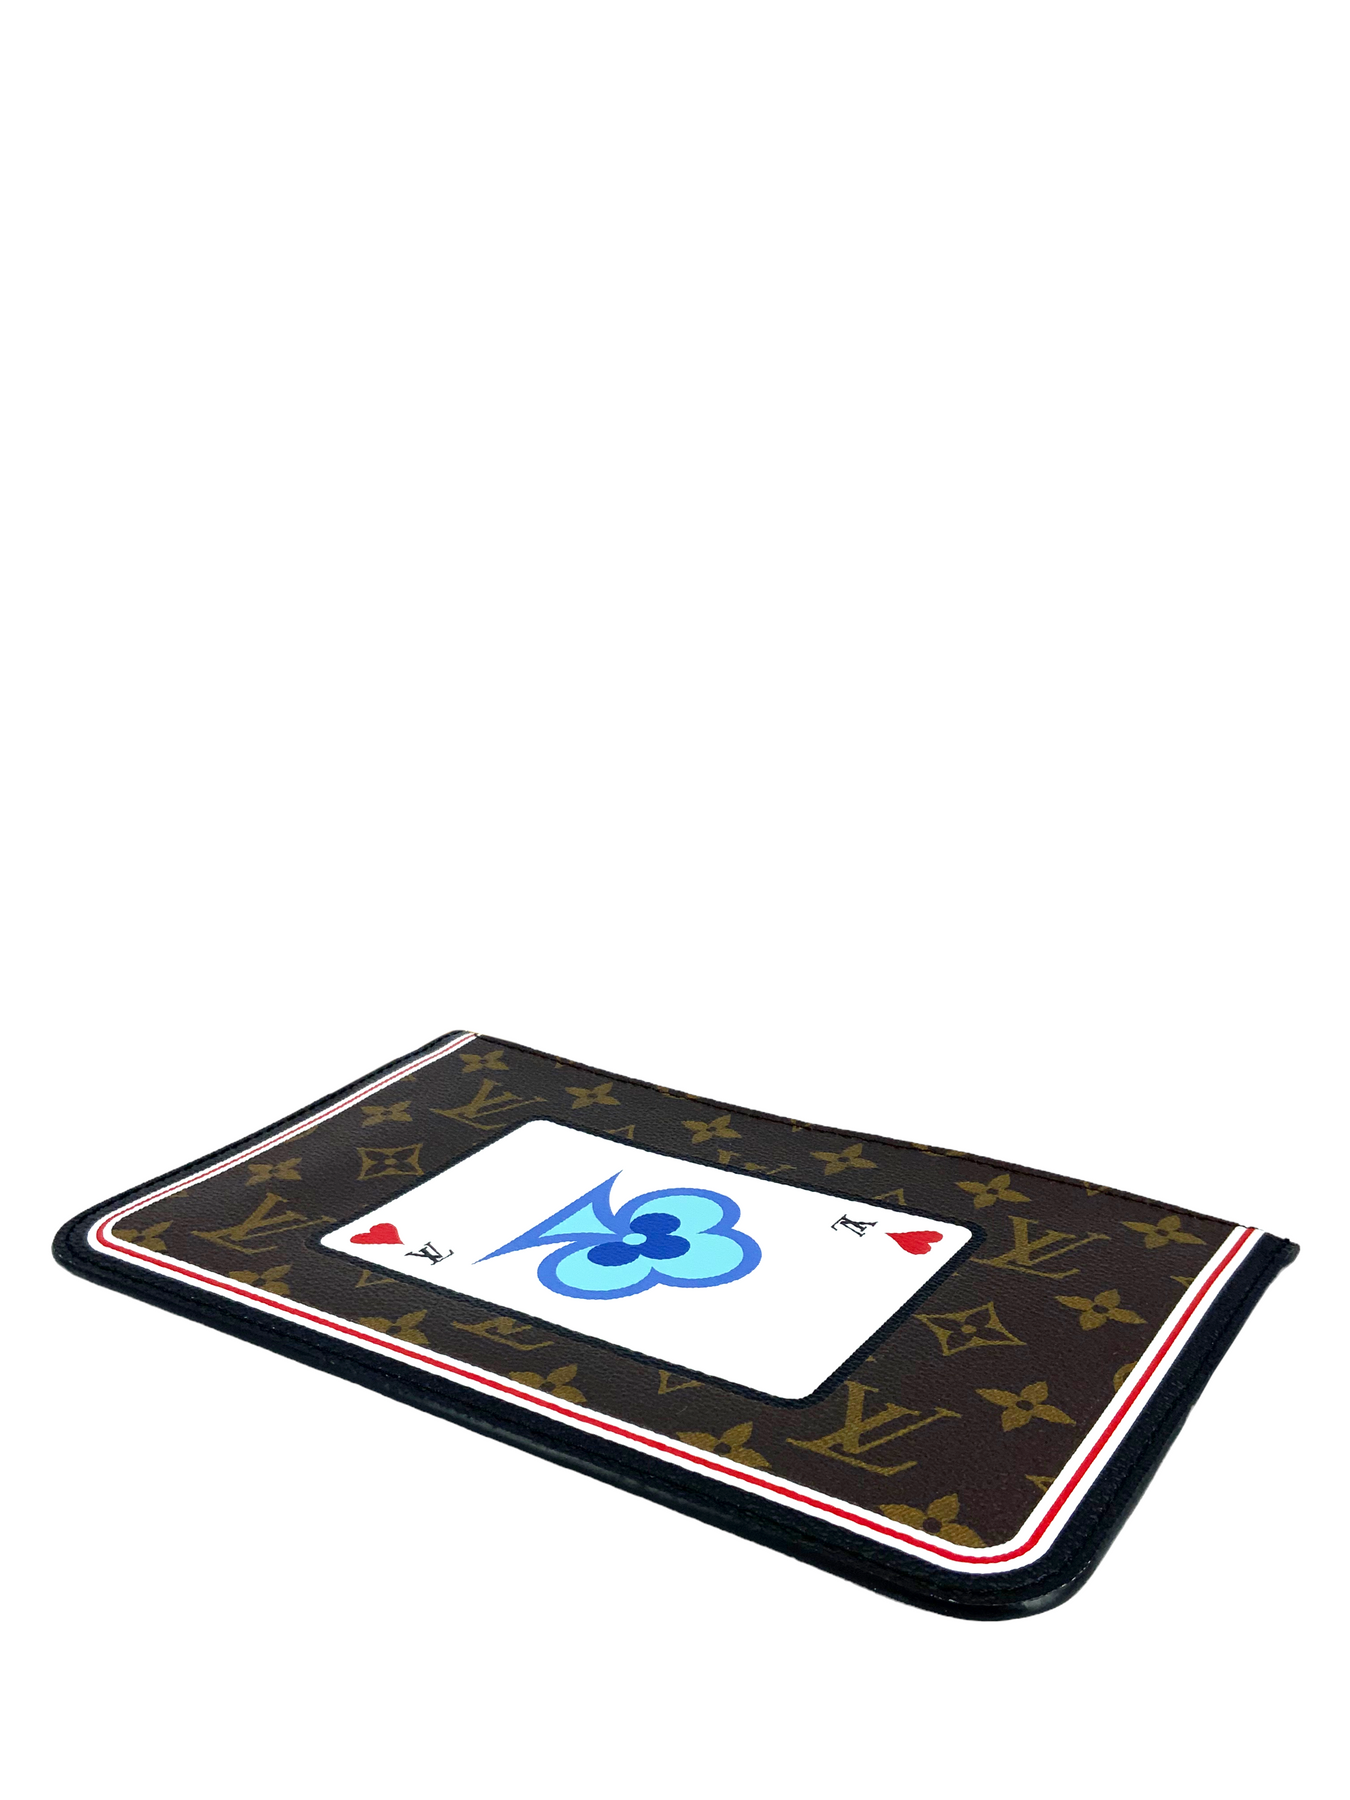 Louis Vuitton Monogram Poker Case Release